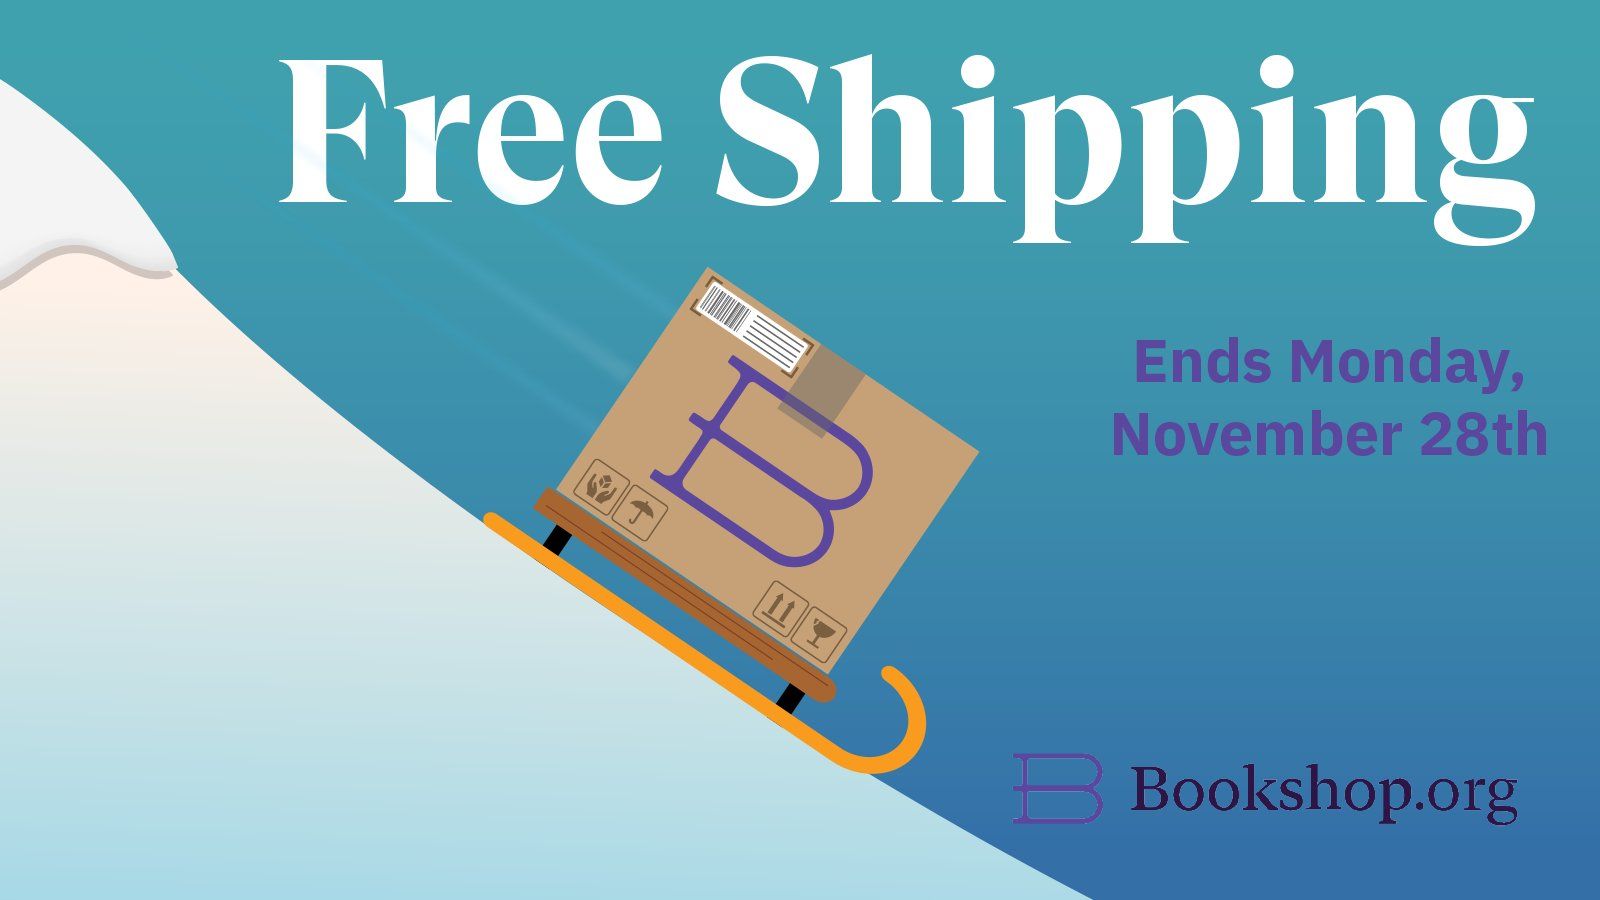 bookshop.org free shipping ad